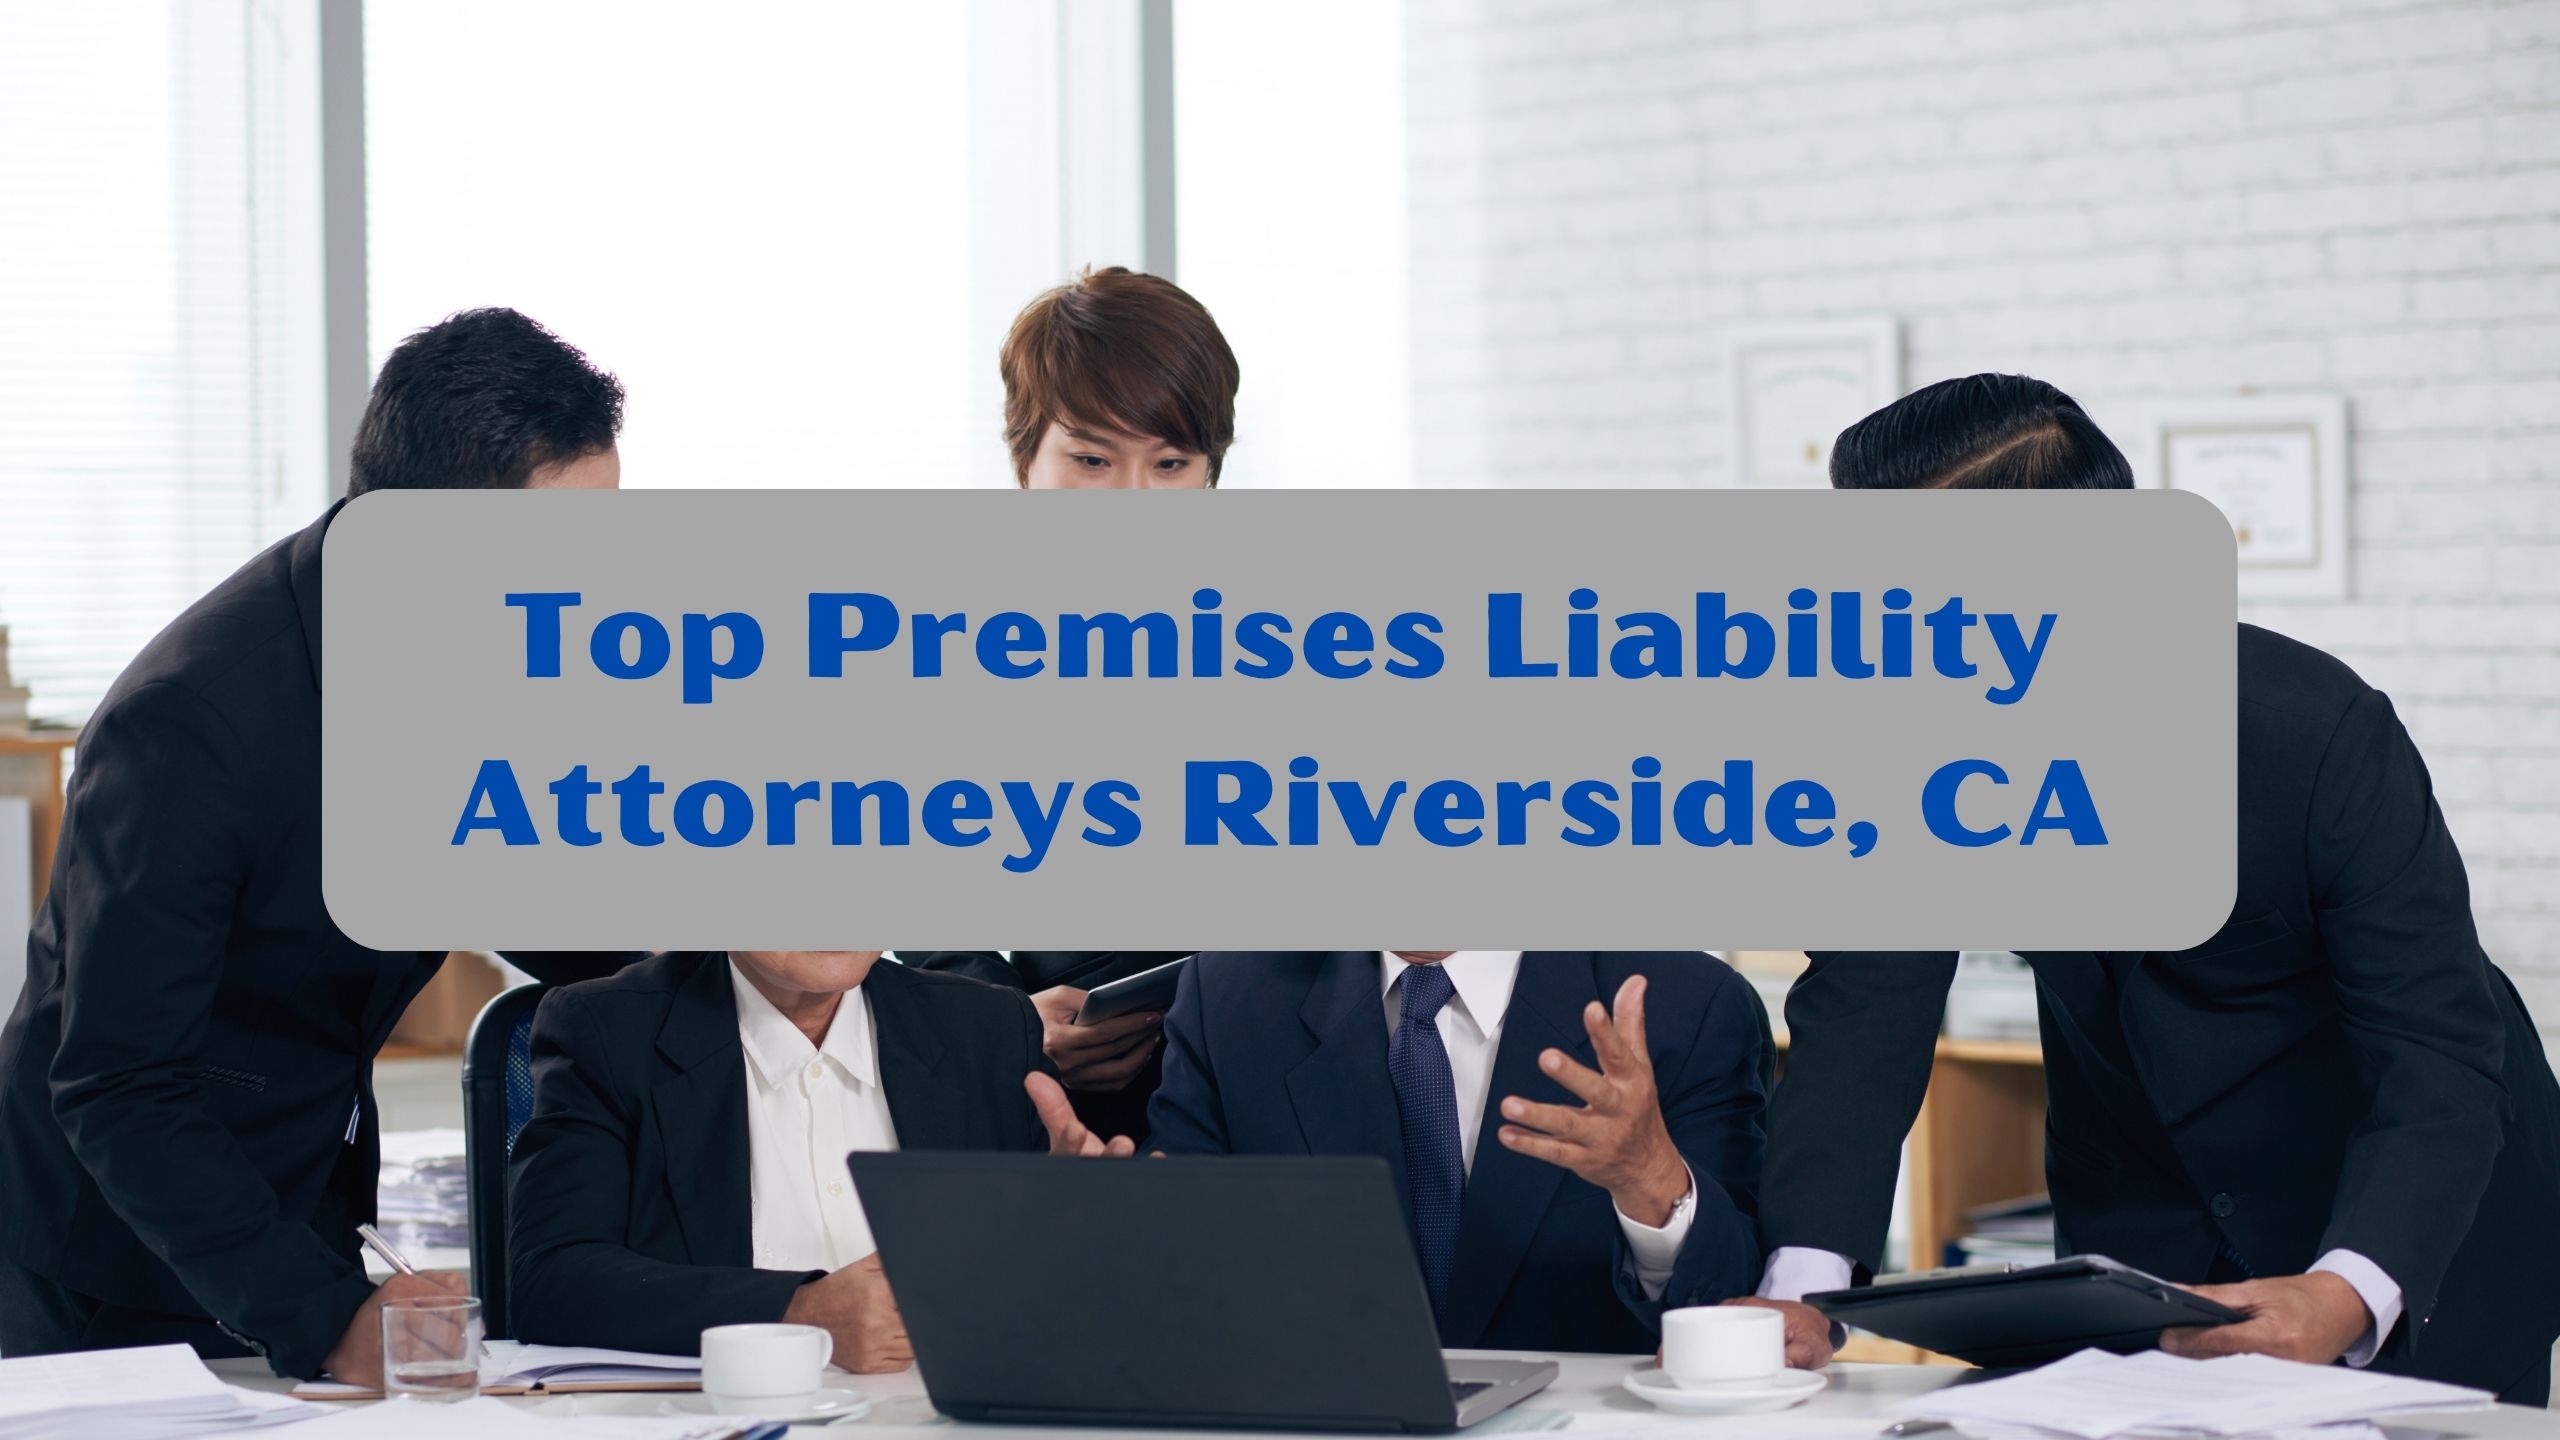 Top Premises Liability Attorneys Riverside